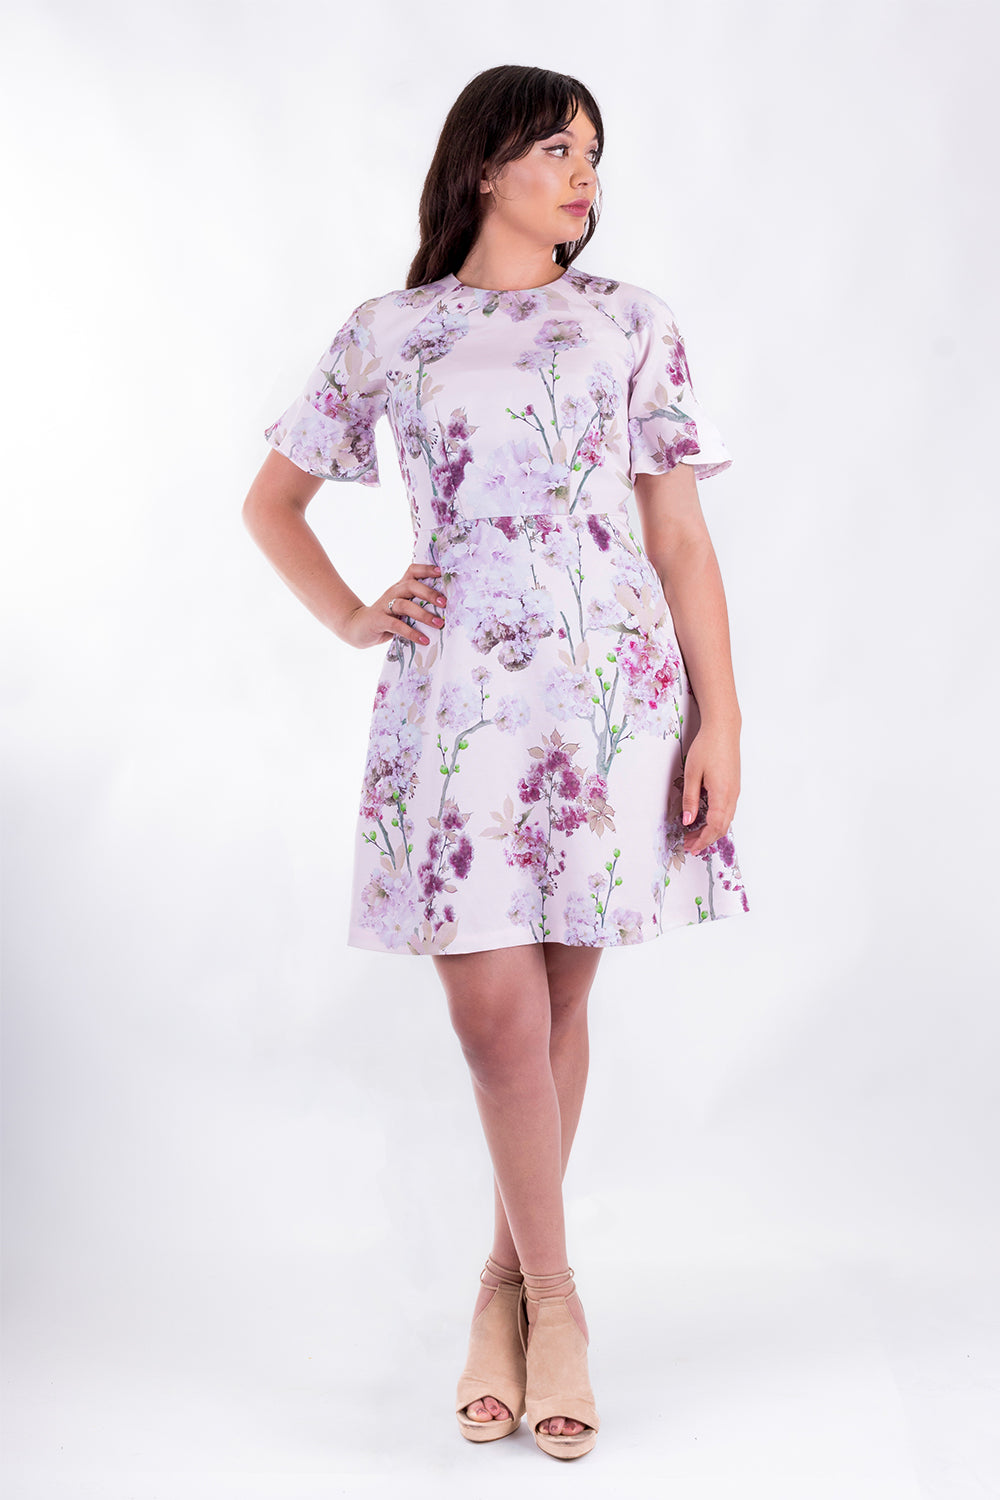 Forget-Me-Not Valerie short sleeve dress pattern in floral print, full-length front shot